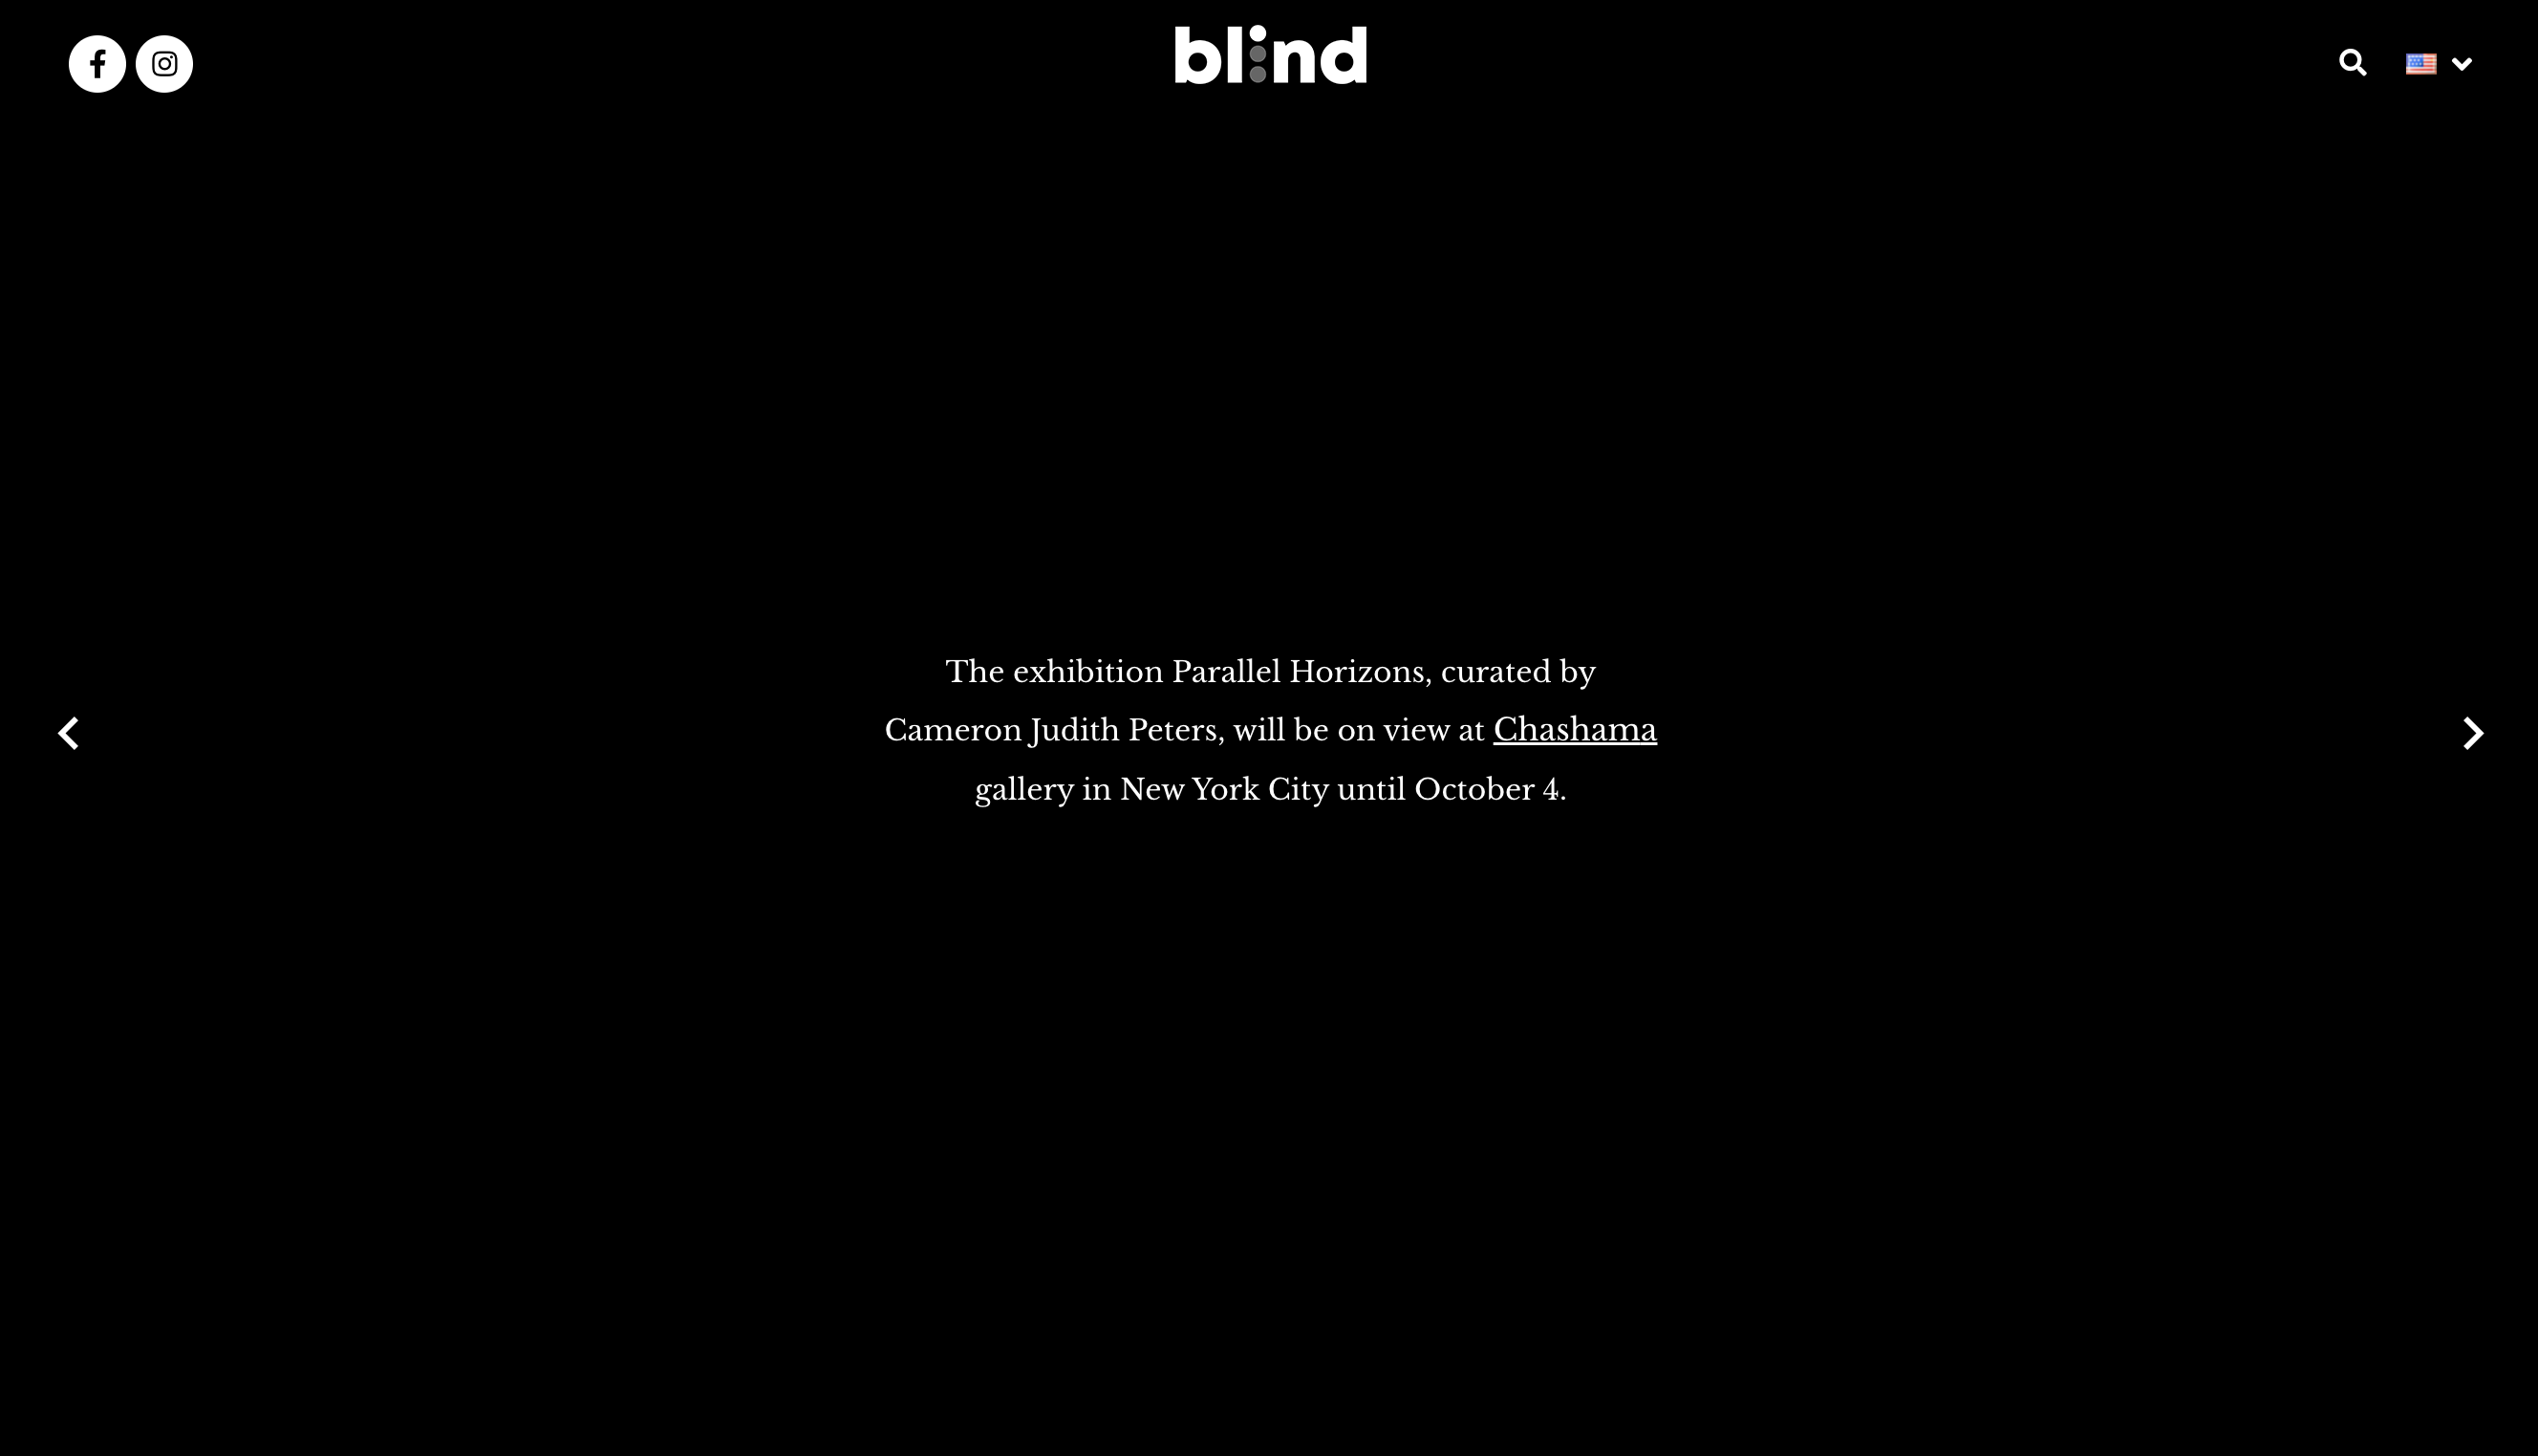 Blind Magazine Features Parallel Horizons Exhibition 